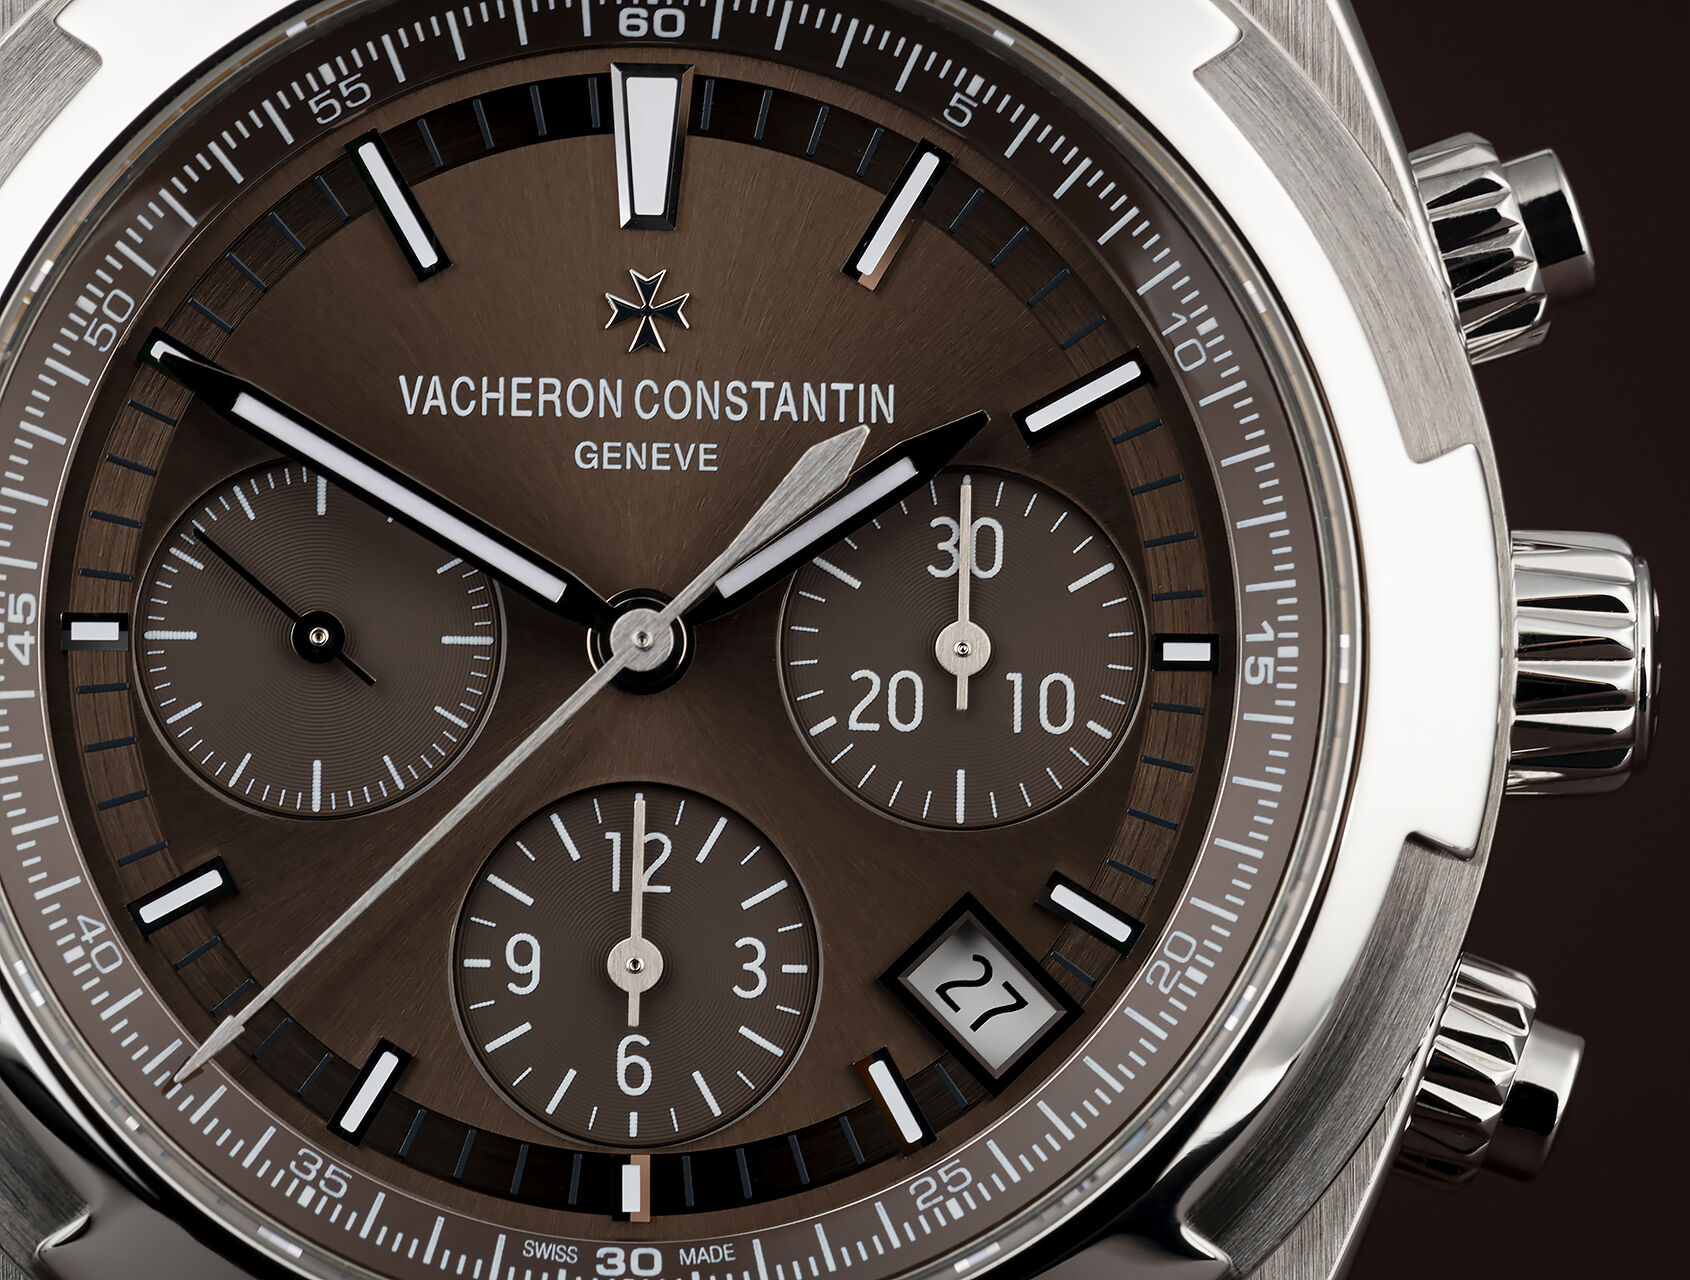 ref 5500V/110A-B147 | 5500V - Under VC Warranty | Vacheron Constantin Overseas Chronograph